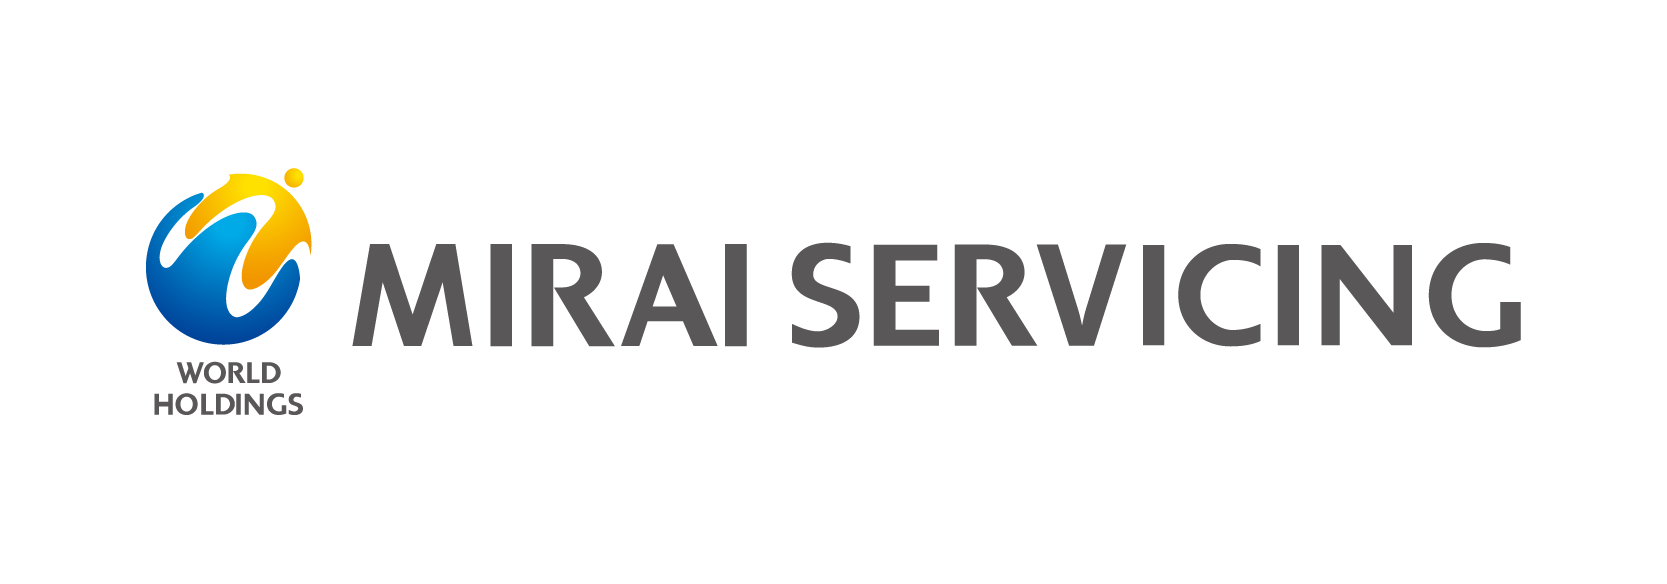 MIRAI SERVICING CO., LTD. (unconsolidated)